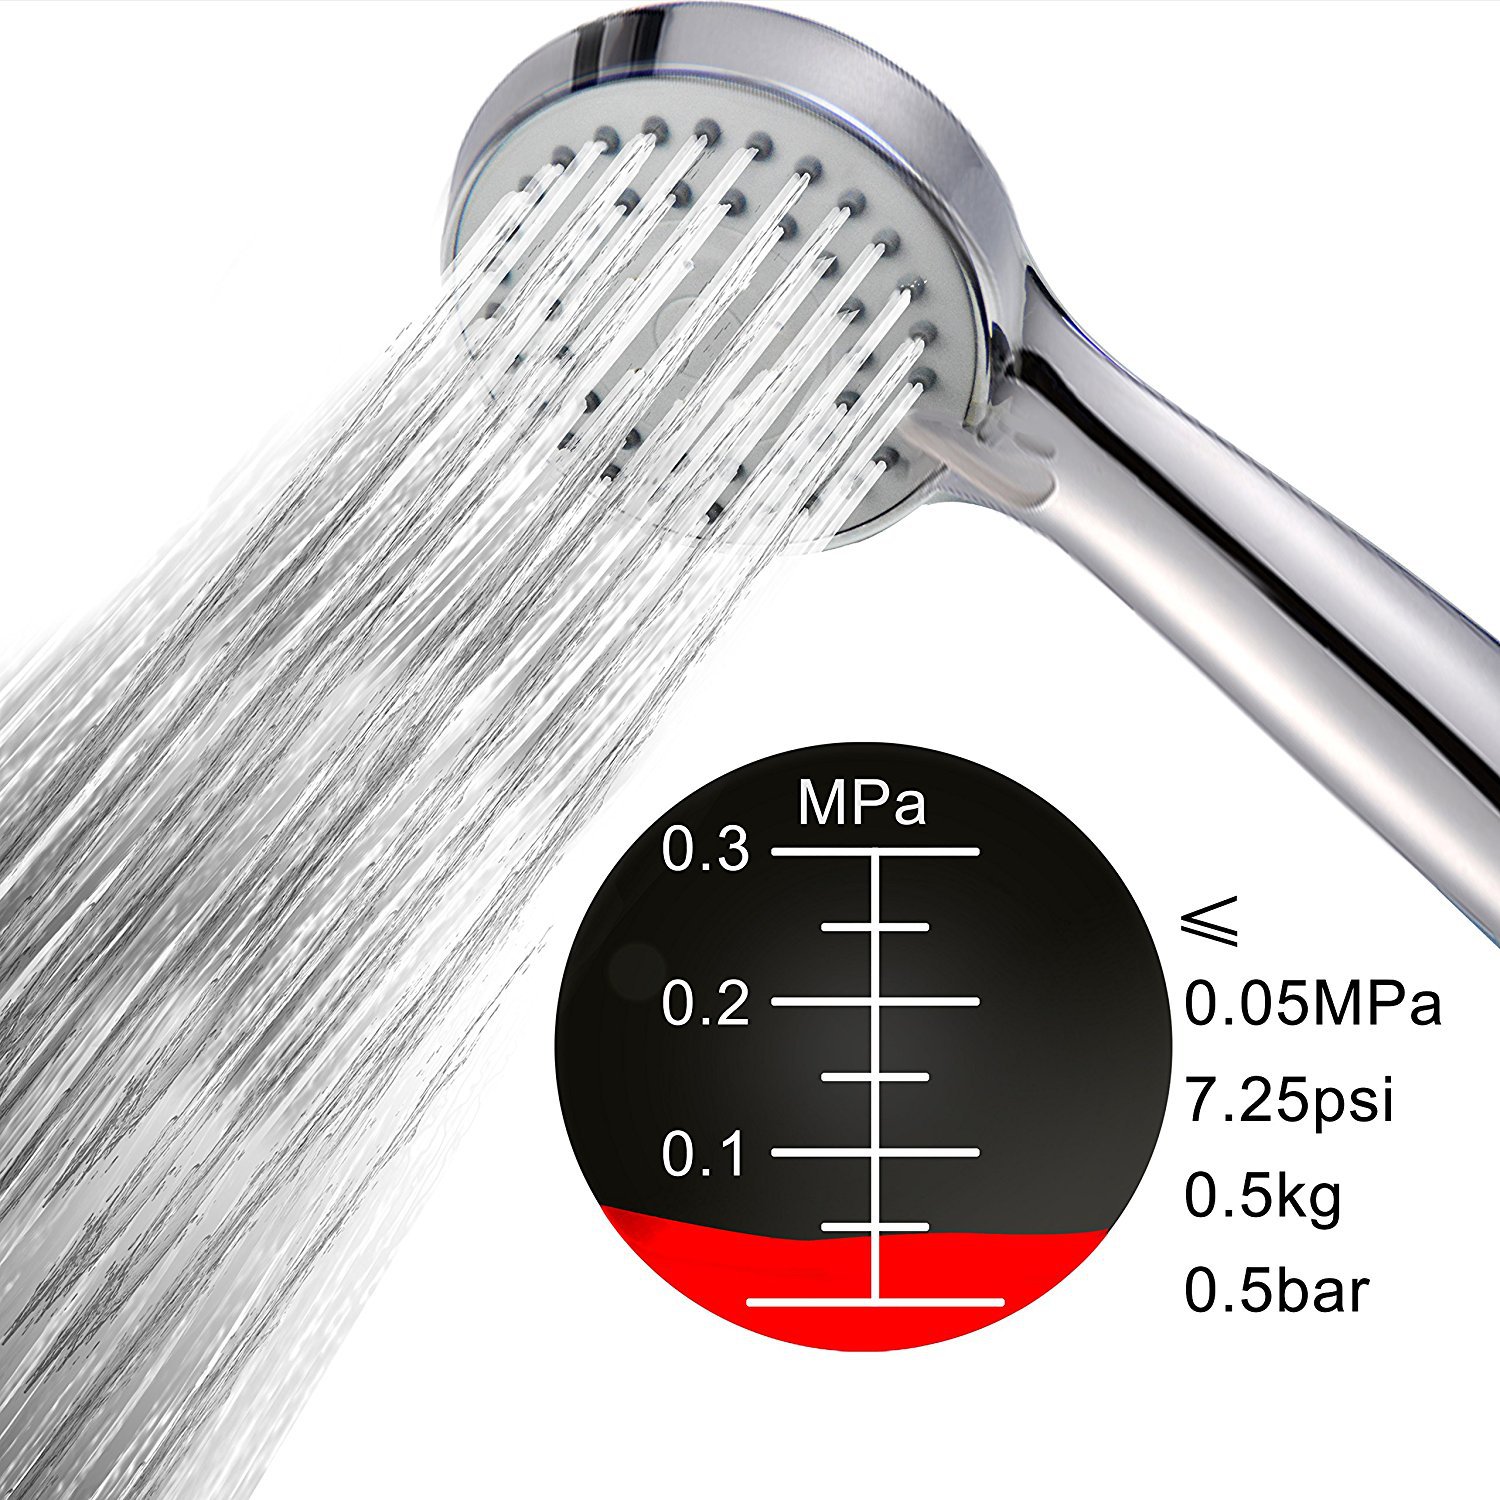 FM_ FJ EE_ Handheld High Pressure Water-saving Bathroom Shower Heads Nozzle Spr 